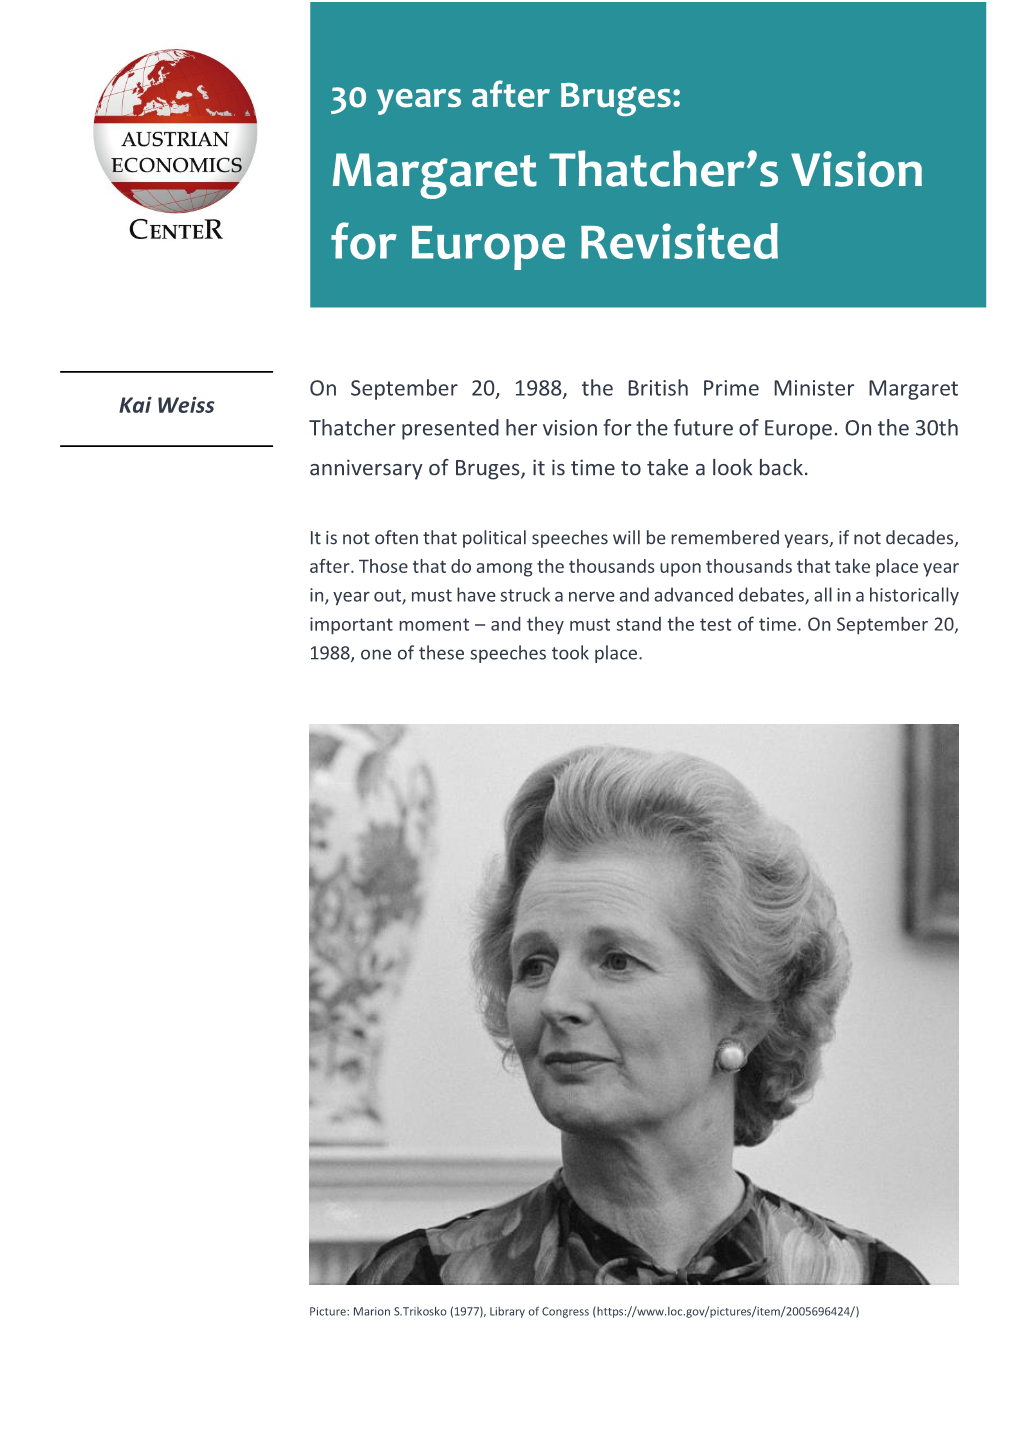 Margaret Thatcher's Vision for Europe Revisited